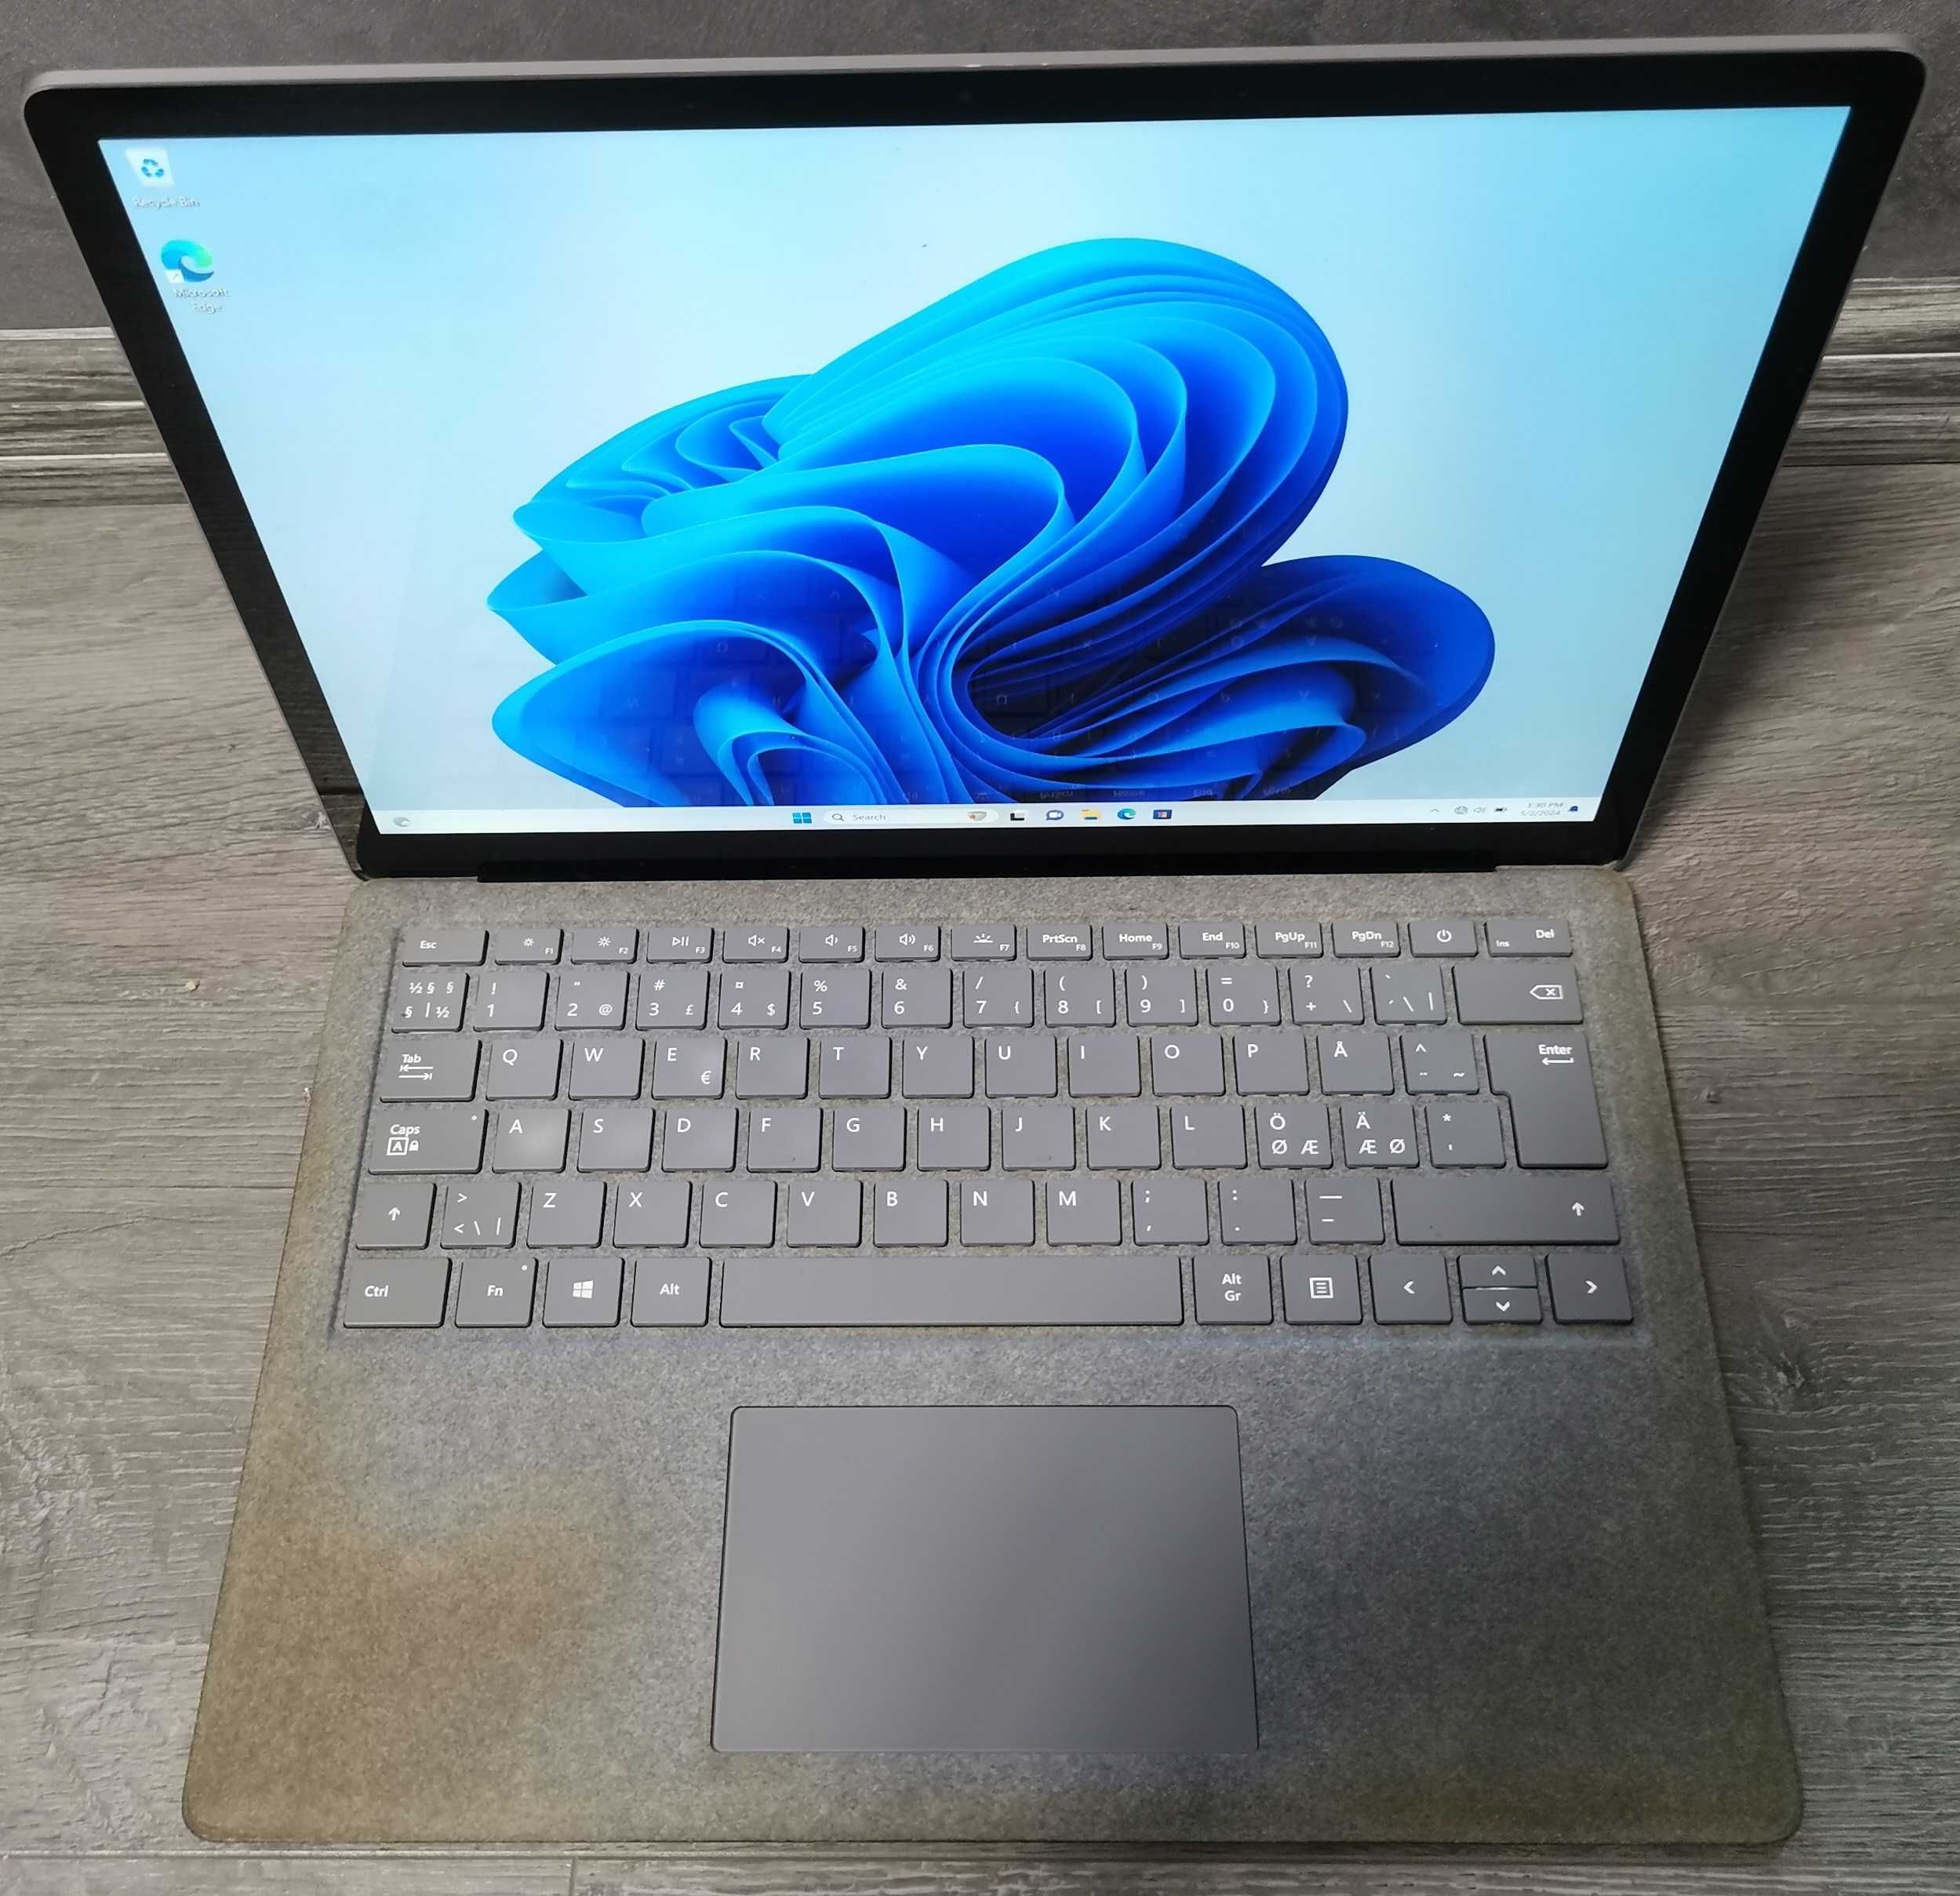 Microsoft Surface Laptop 2 i5 8350u ssd 256gb display 2K touch m1769